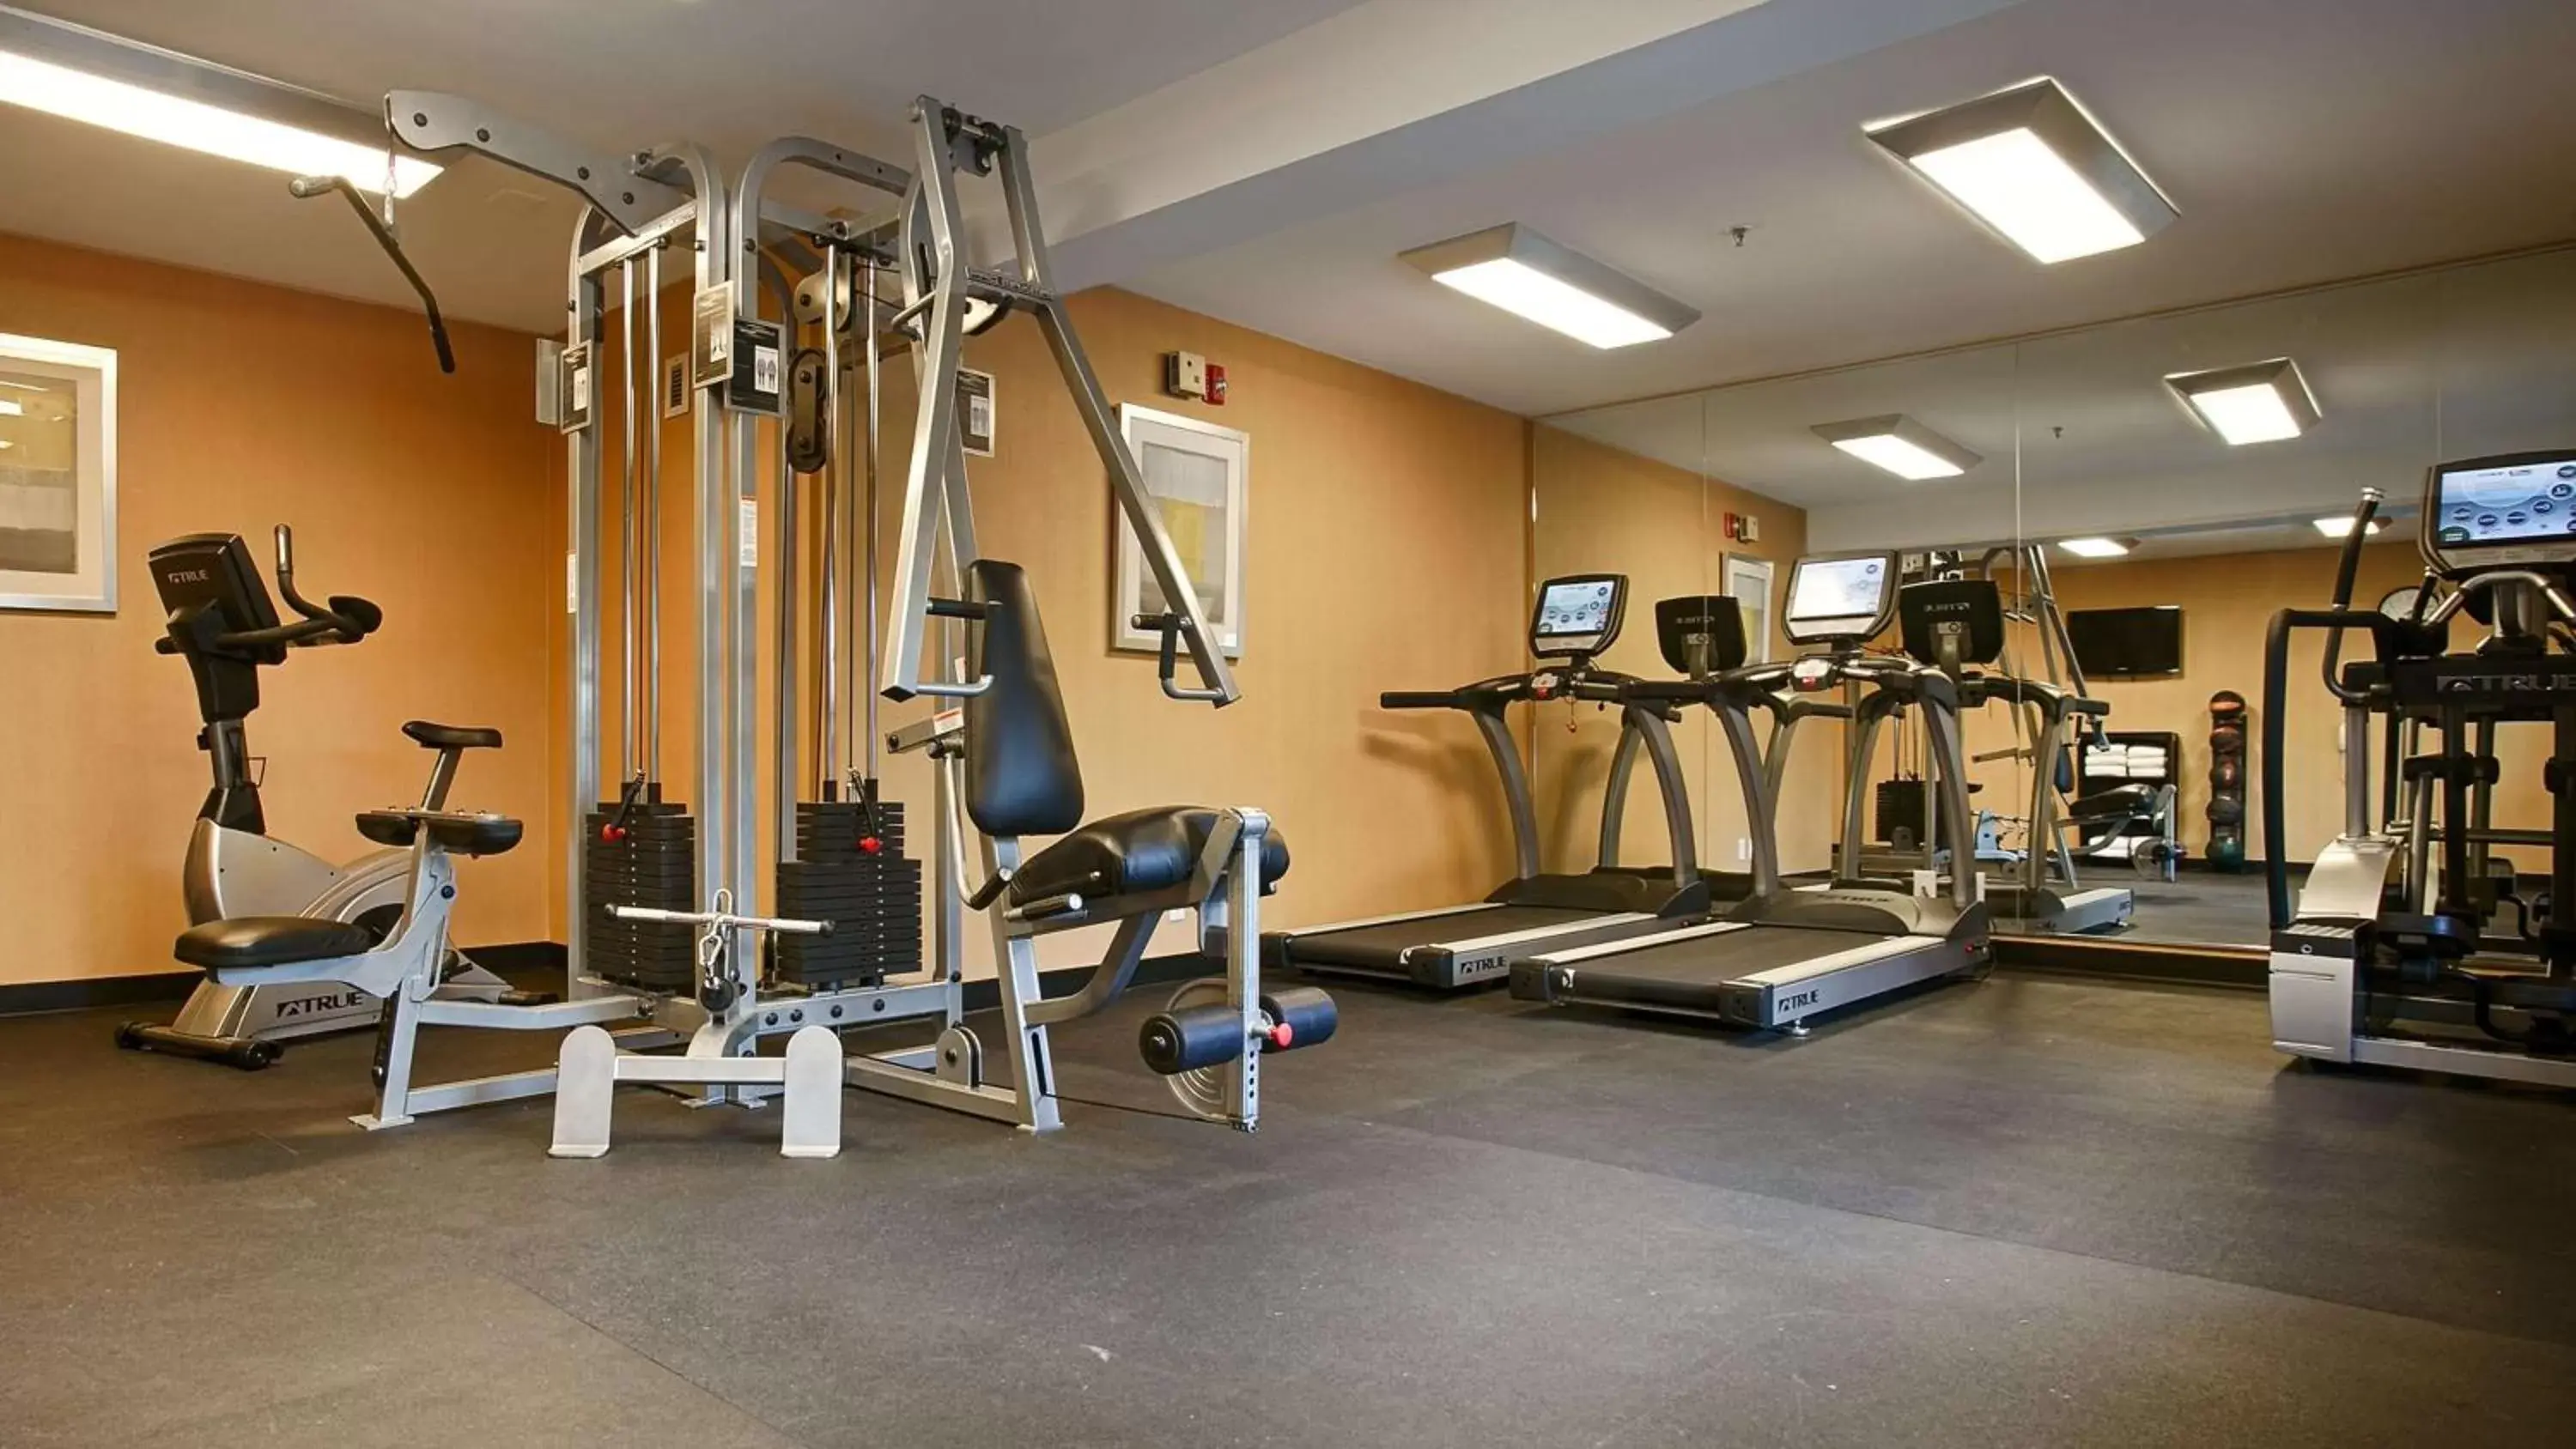 Fitness centre/facilities, Fitness Center/Facilities in Best Western Plus Rancho Cordova Inn